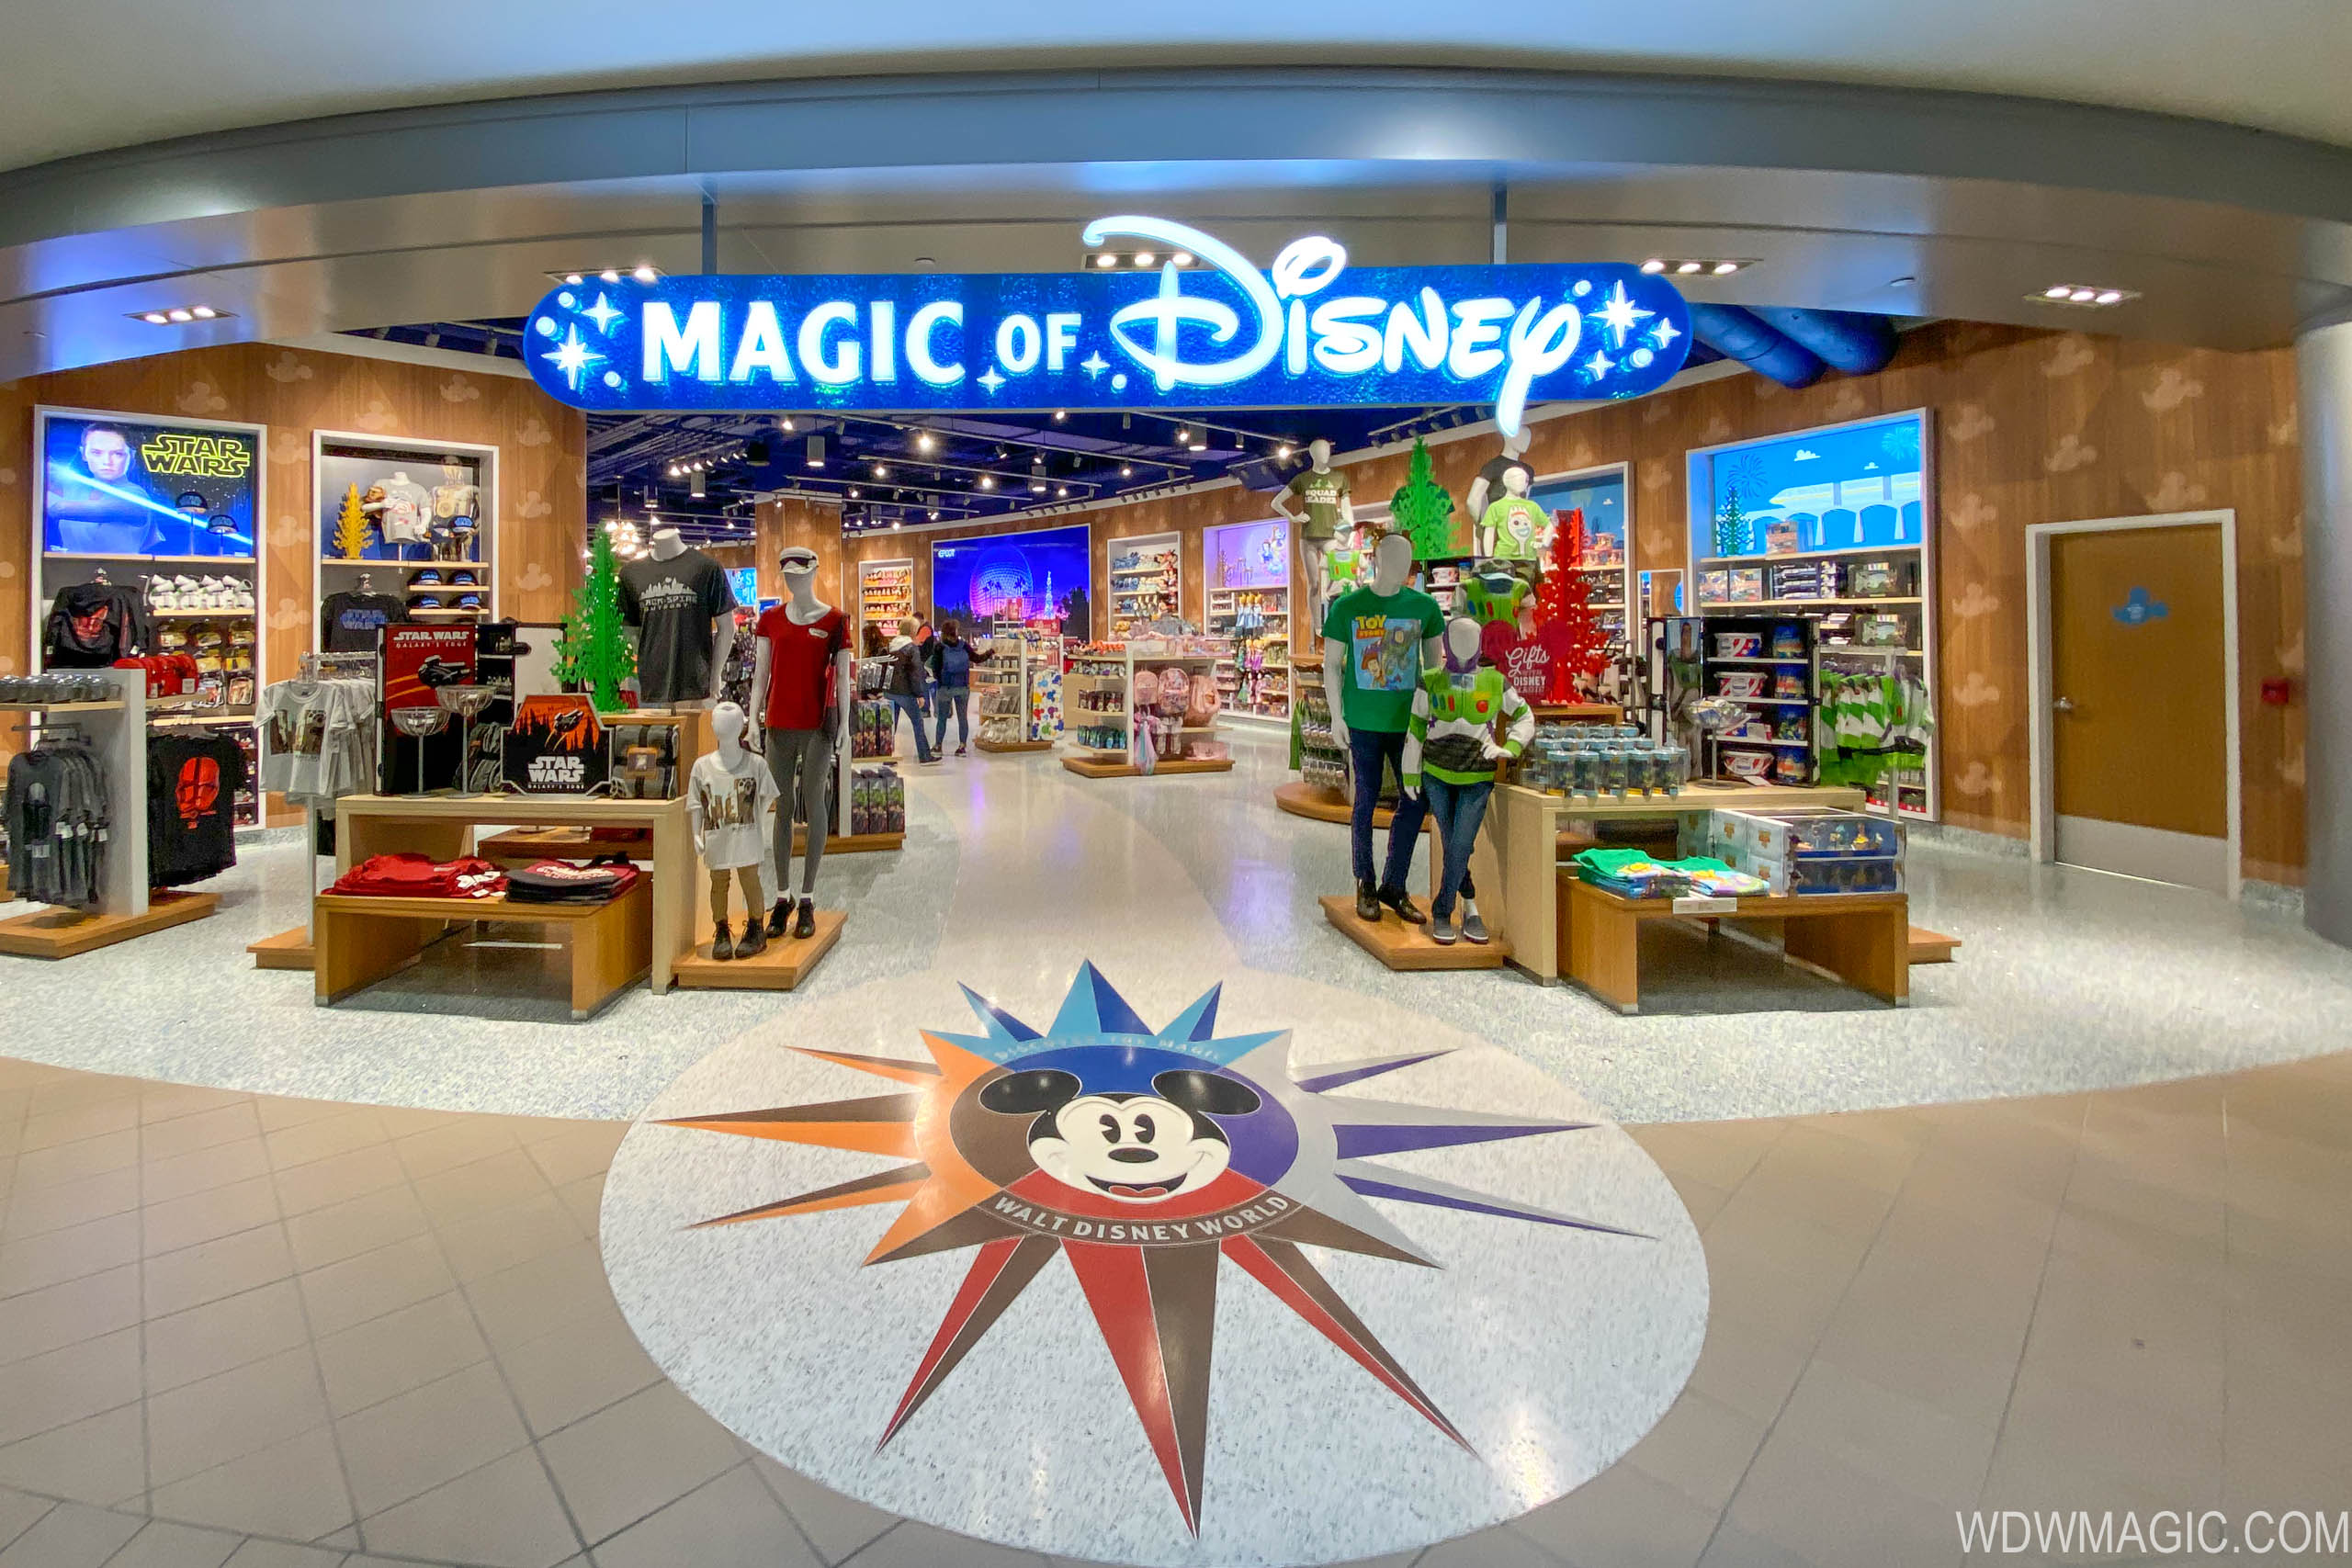 The Magic of Disney Store at Orlando International Airport